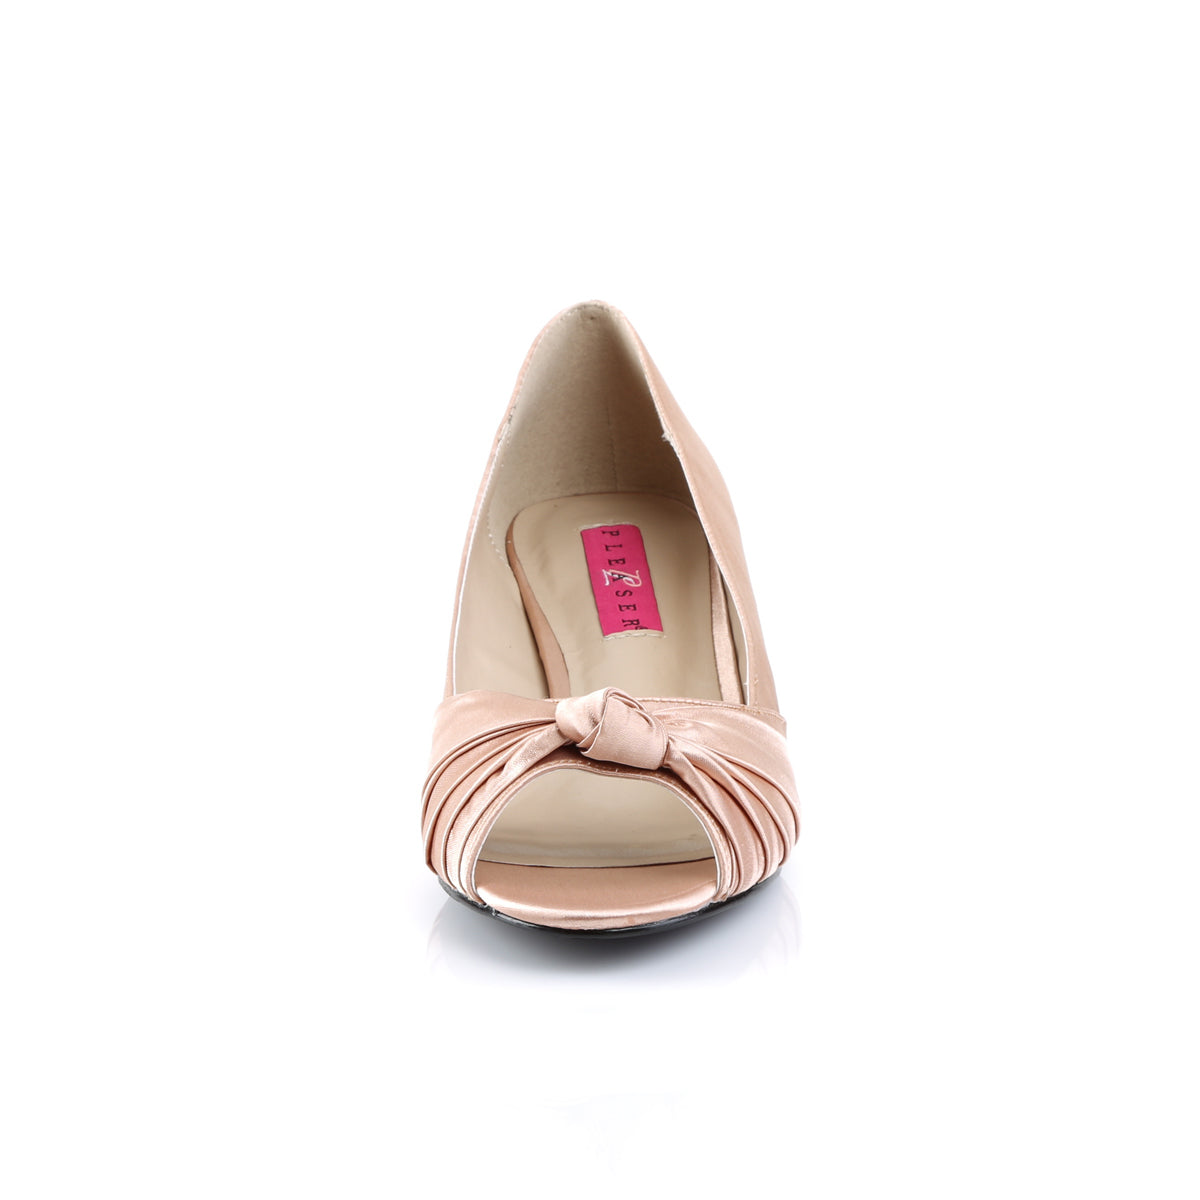 FAB-422 Pleaser Pink Label 2" Heel Blush Satin Fetish Shoes-Pleaser Pink Label- Drag Queen Shoes